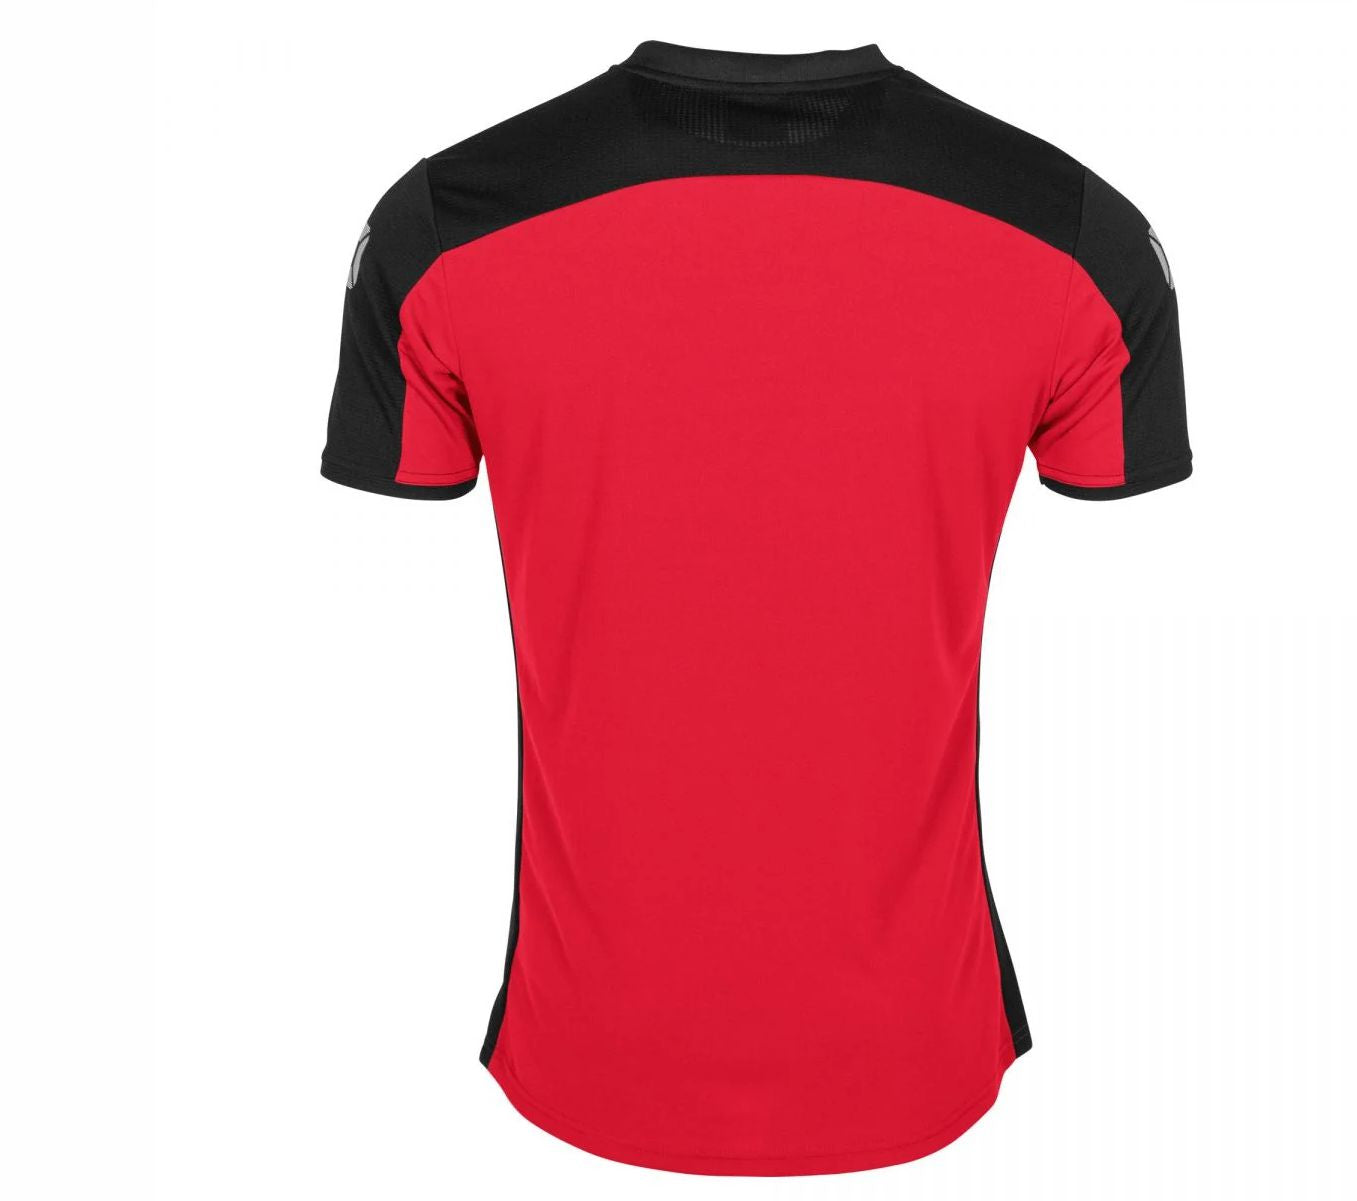 Stanno - Pride Shirt - Red & Black - Adult